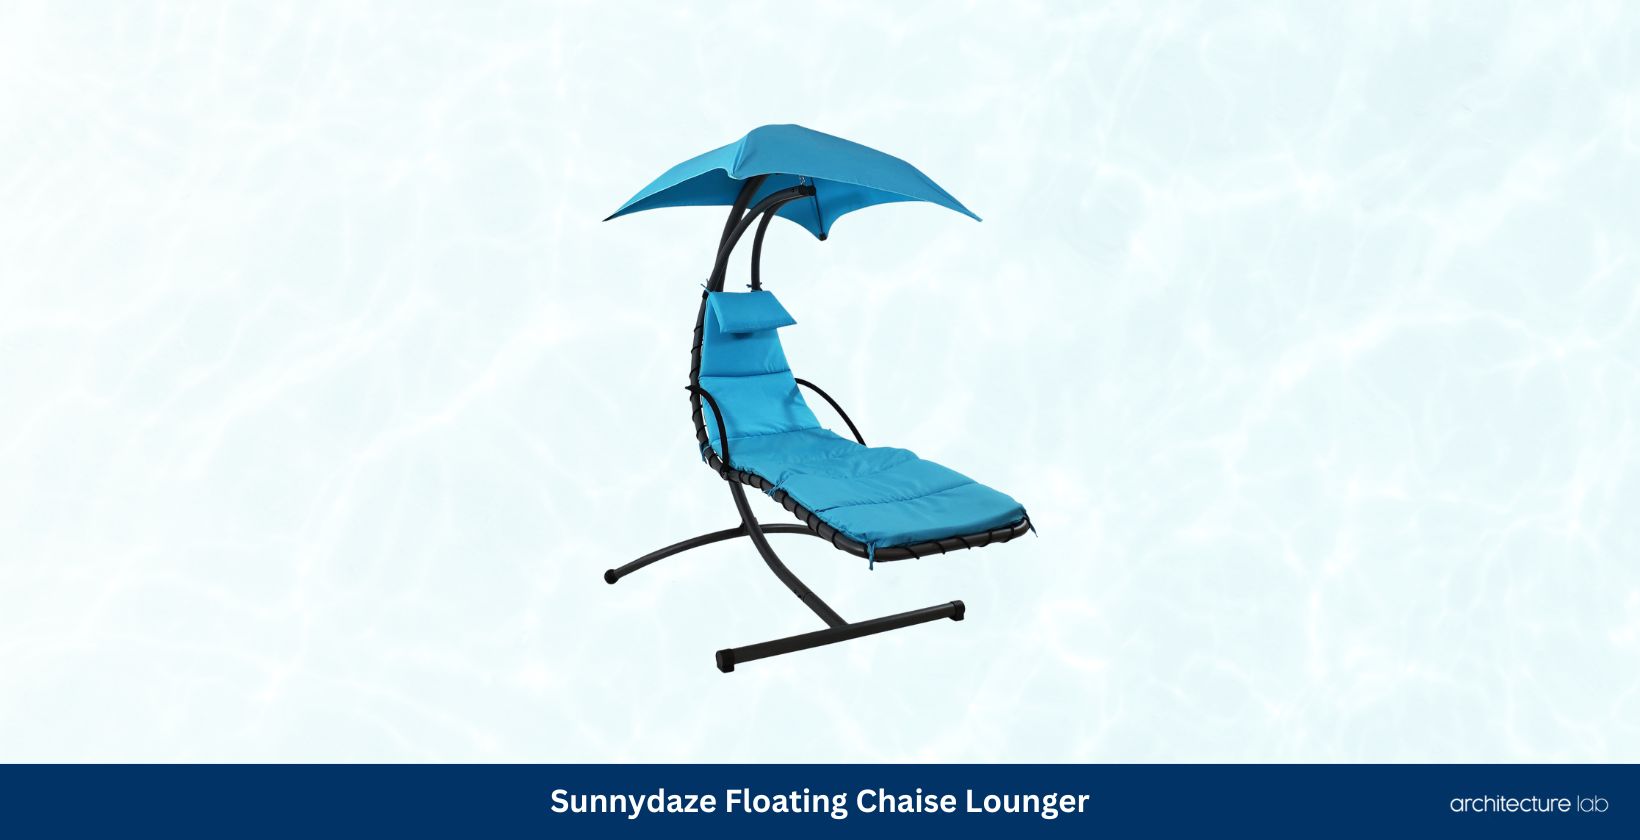 Sunnydaze floating chaise lounger